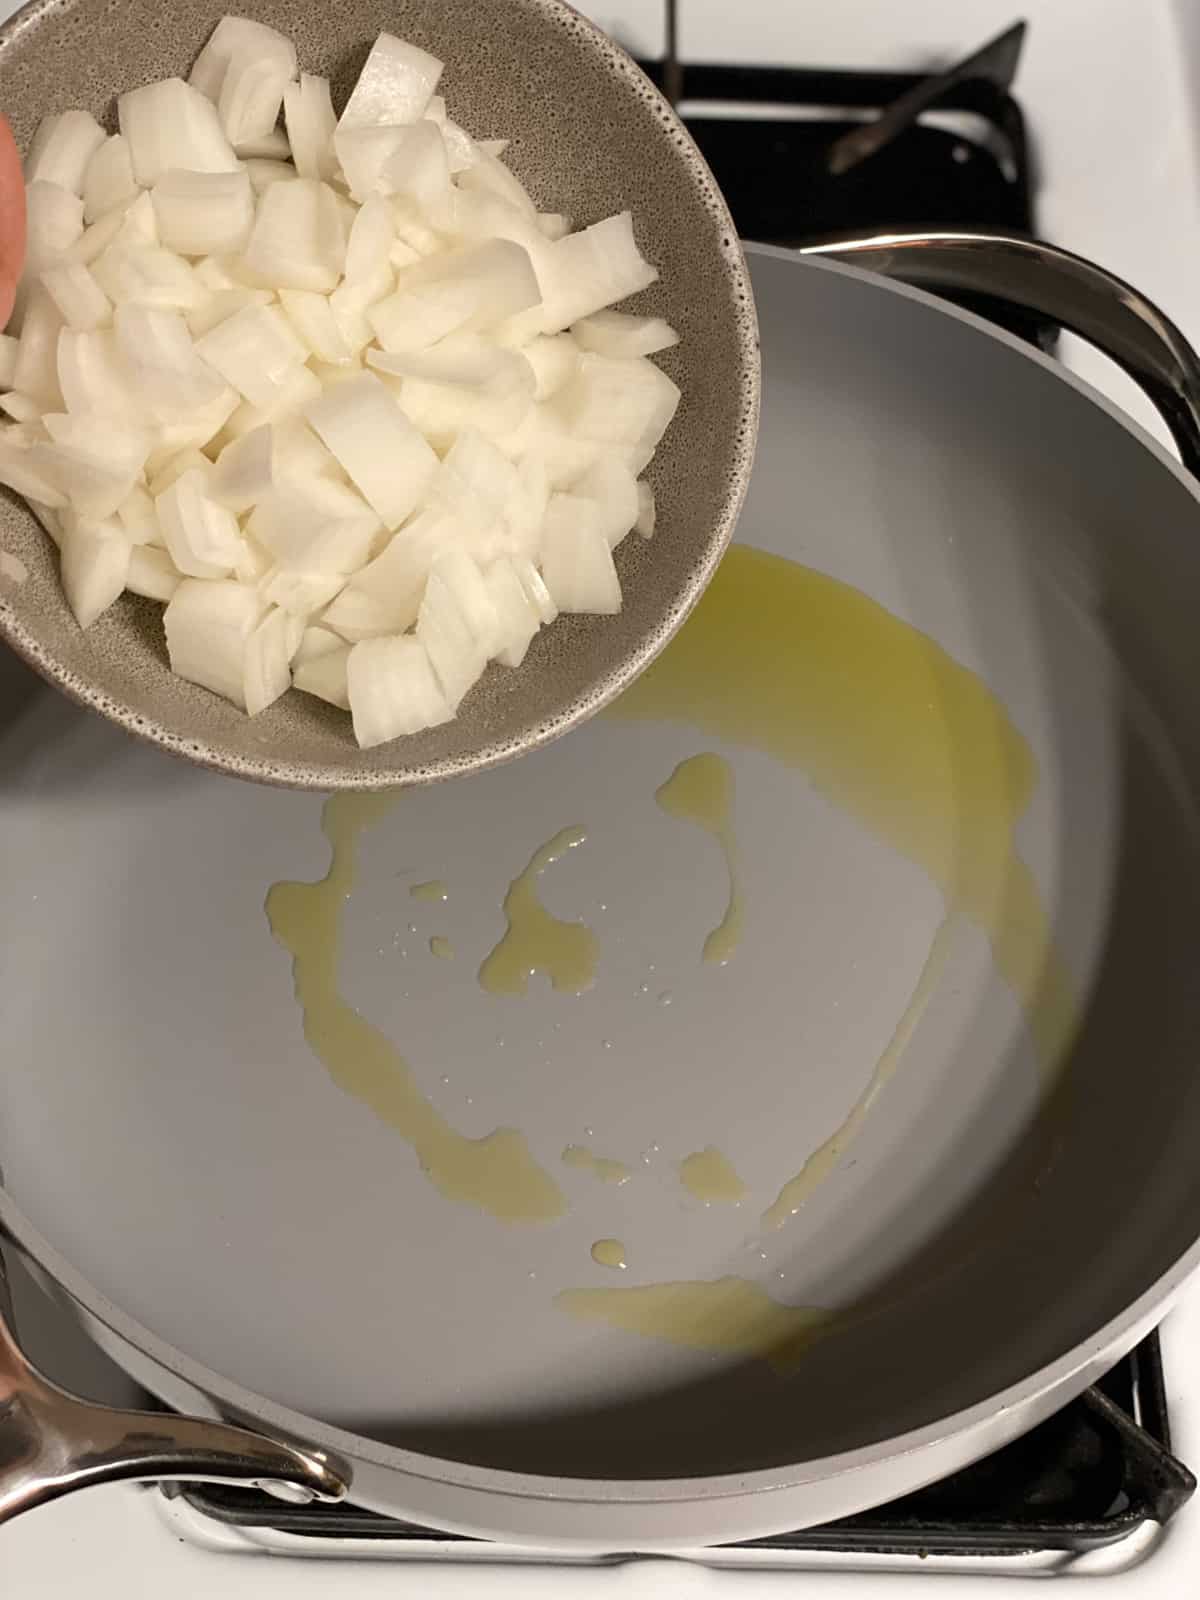 process shot of adding onions to pan